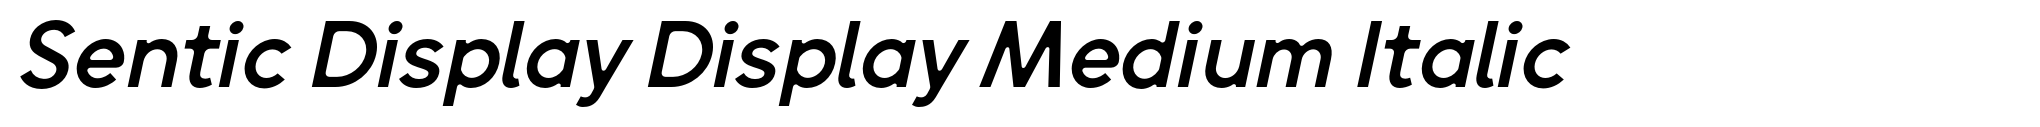 Sentic Display Display Medium Italic image